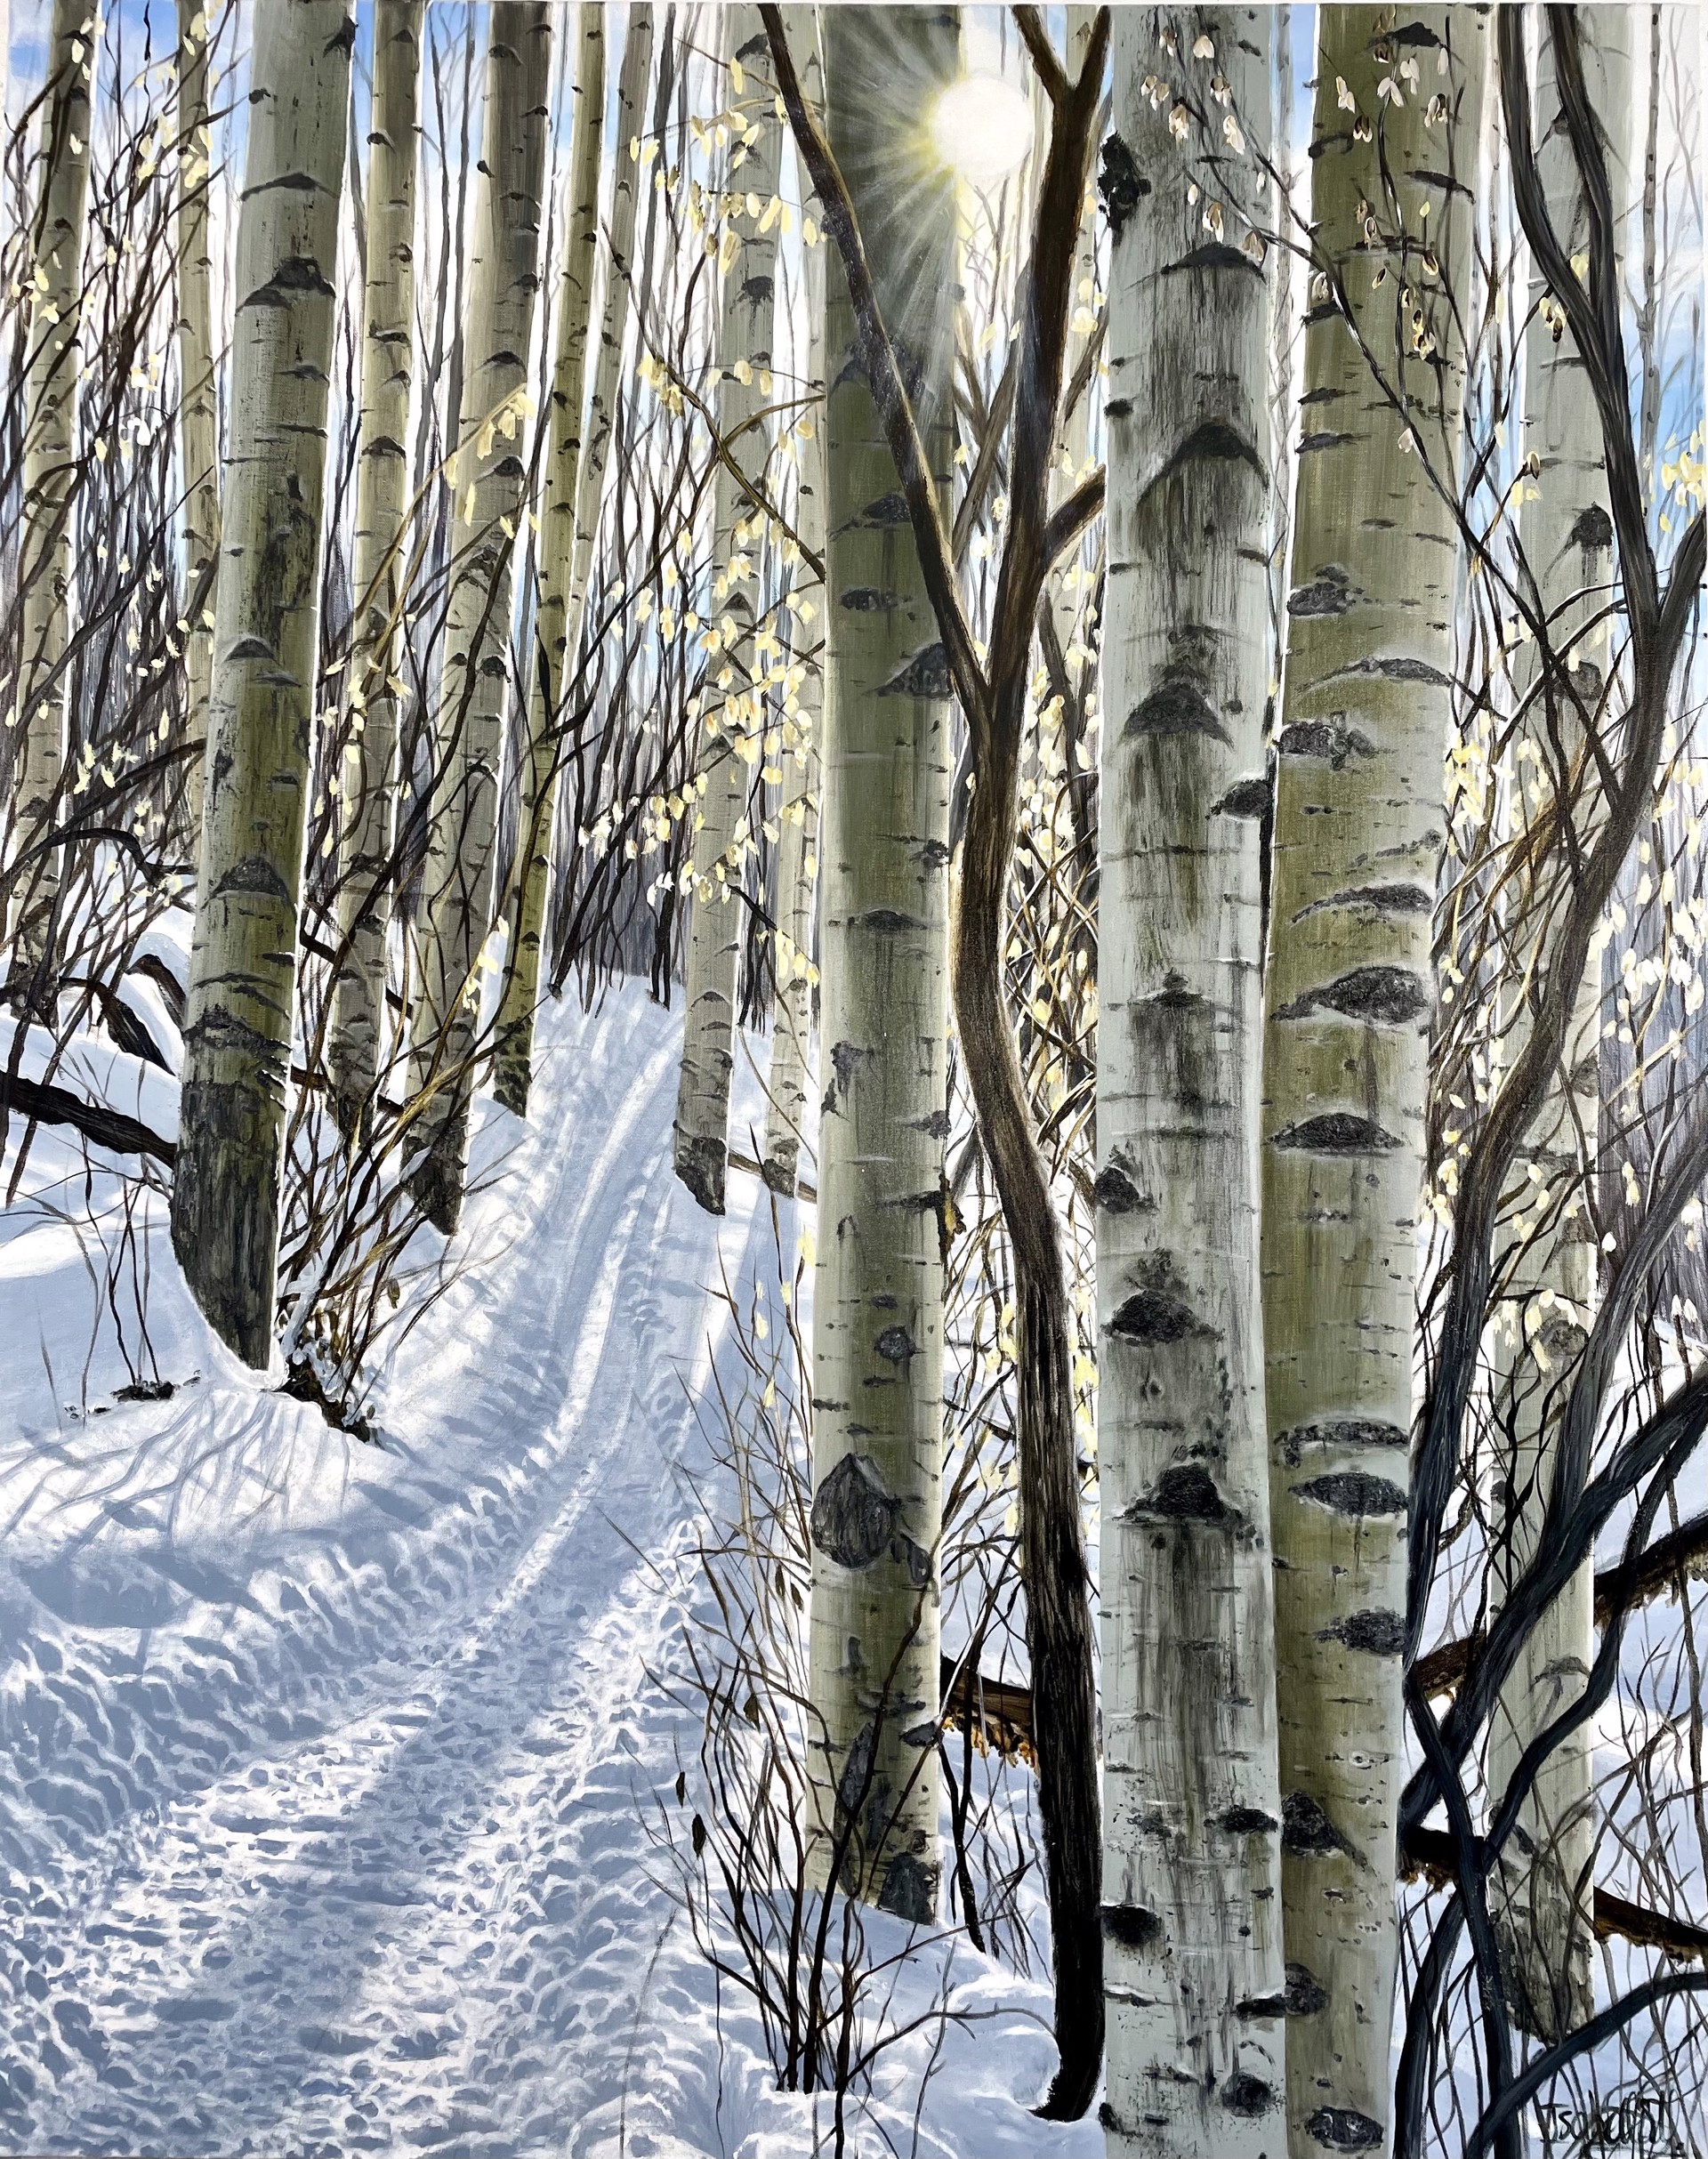 “Winter Bells of Mid December; Tom Blake Trail” by Isabella Garaffa